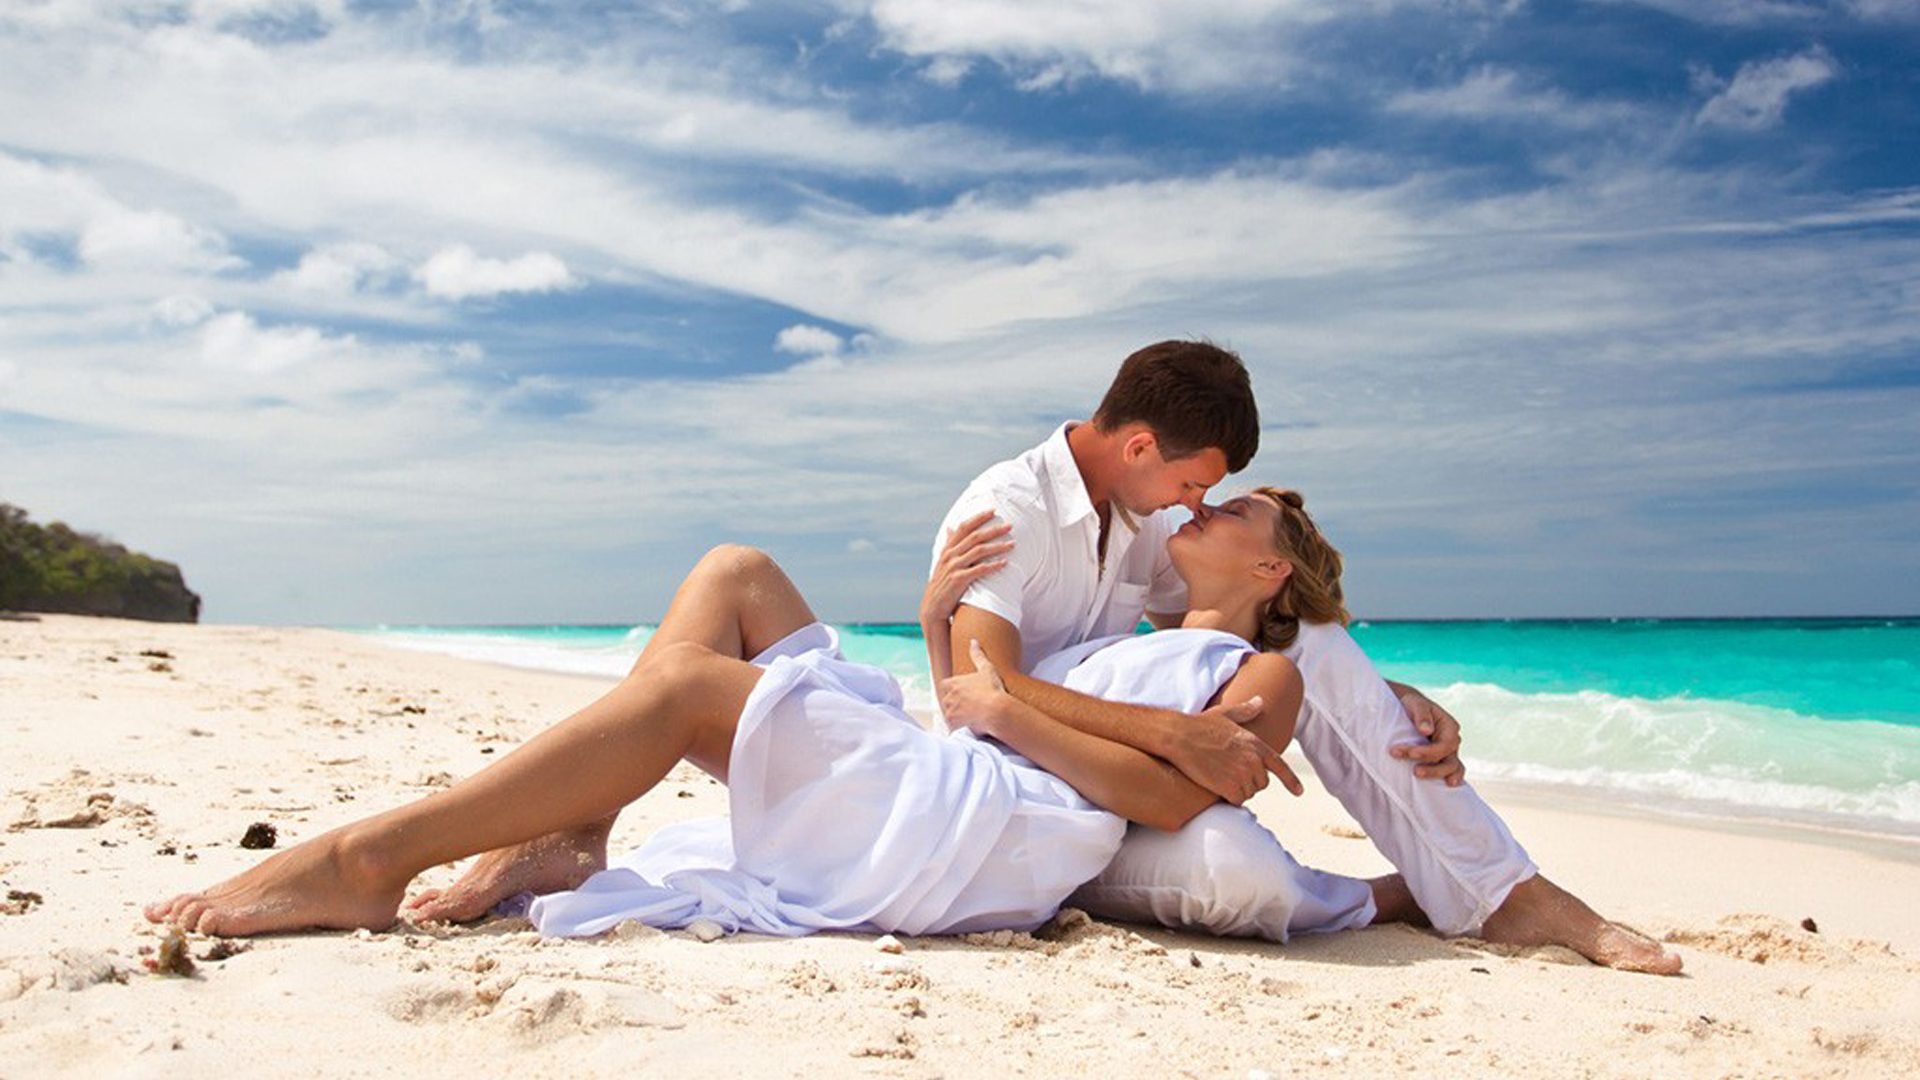 Love-romance-kiss-summer-sea-beach-Romantic-couple